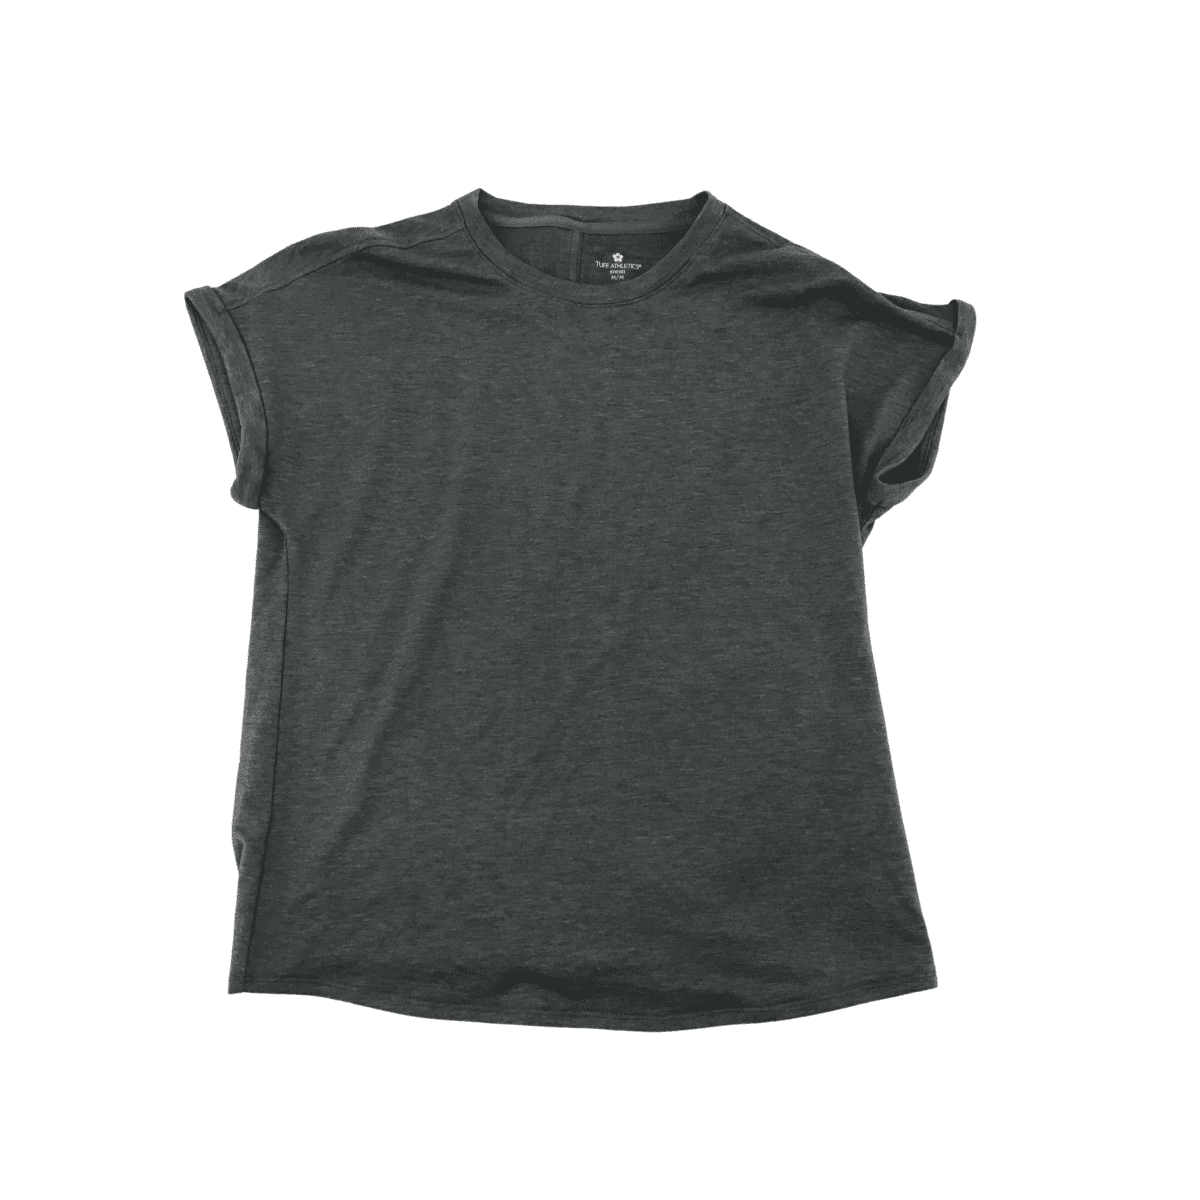 Tuff Athletics - Women's Activewear Athletic T-Shirt Top - M, Gray